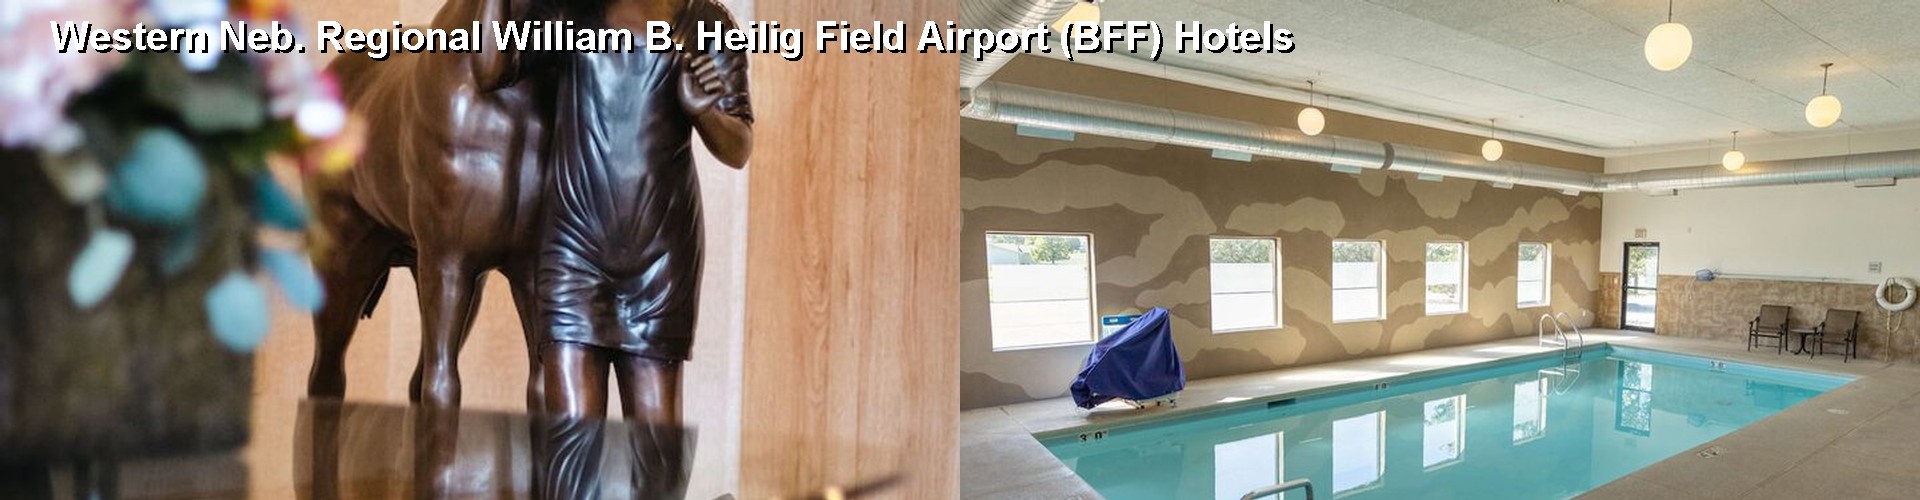 5 Best Hotels near Western Neb. Regional William B. Heilig Field Airport (BFF)